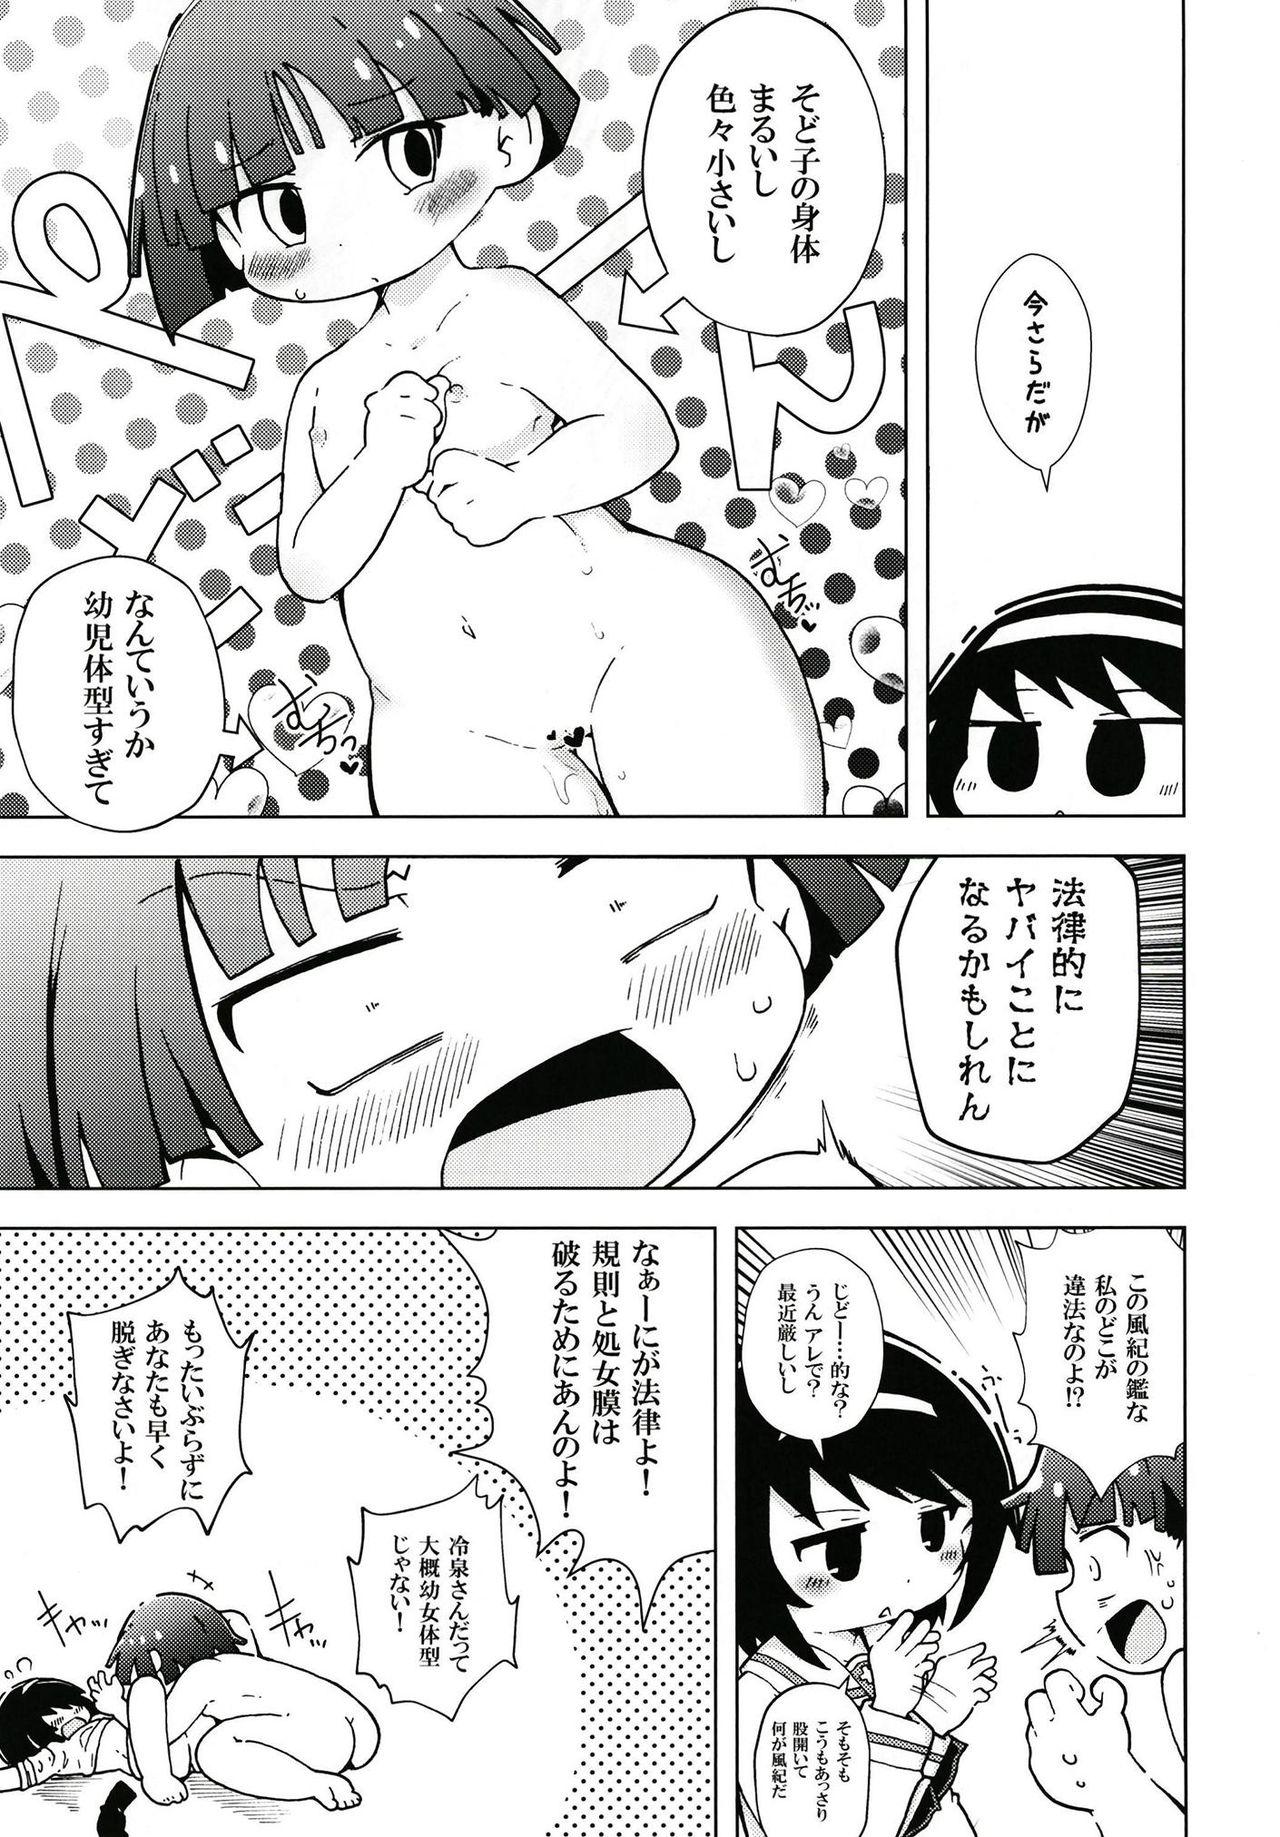 Family Urakamoe 1 - Girls und panzer Dick - Page 10